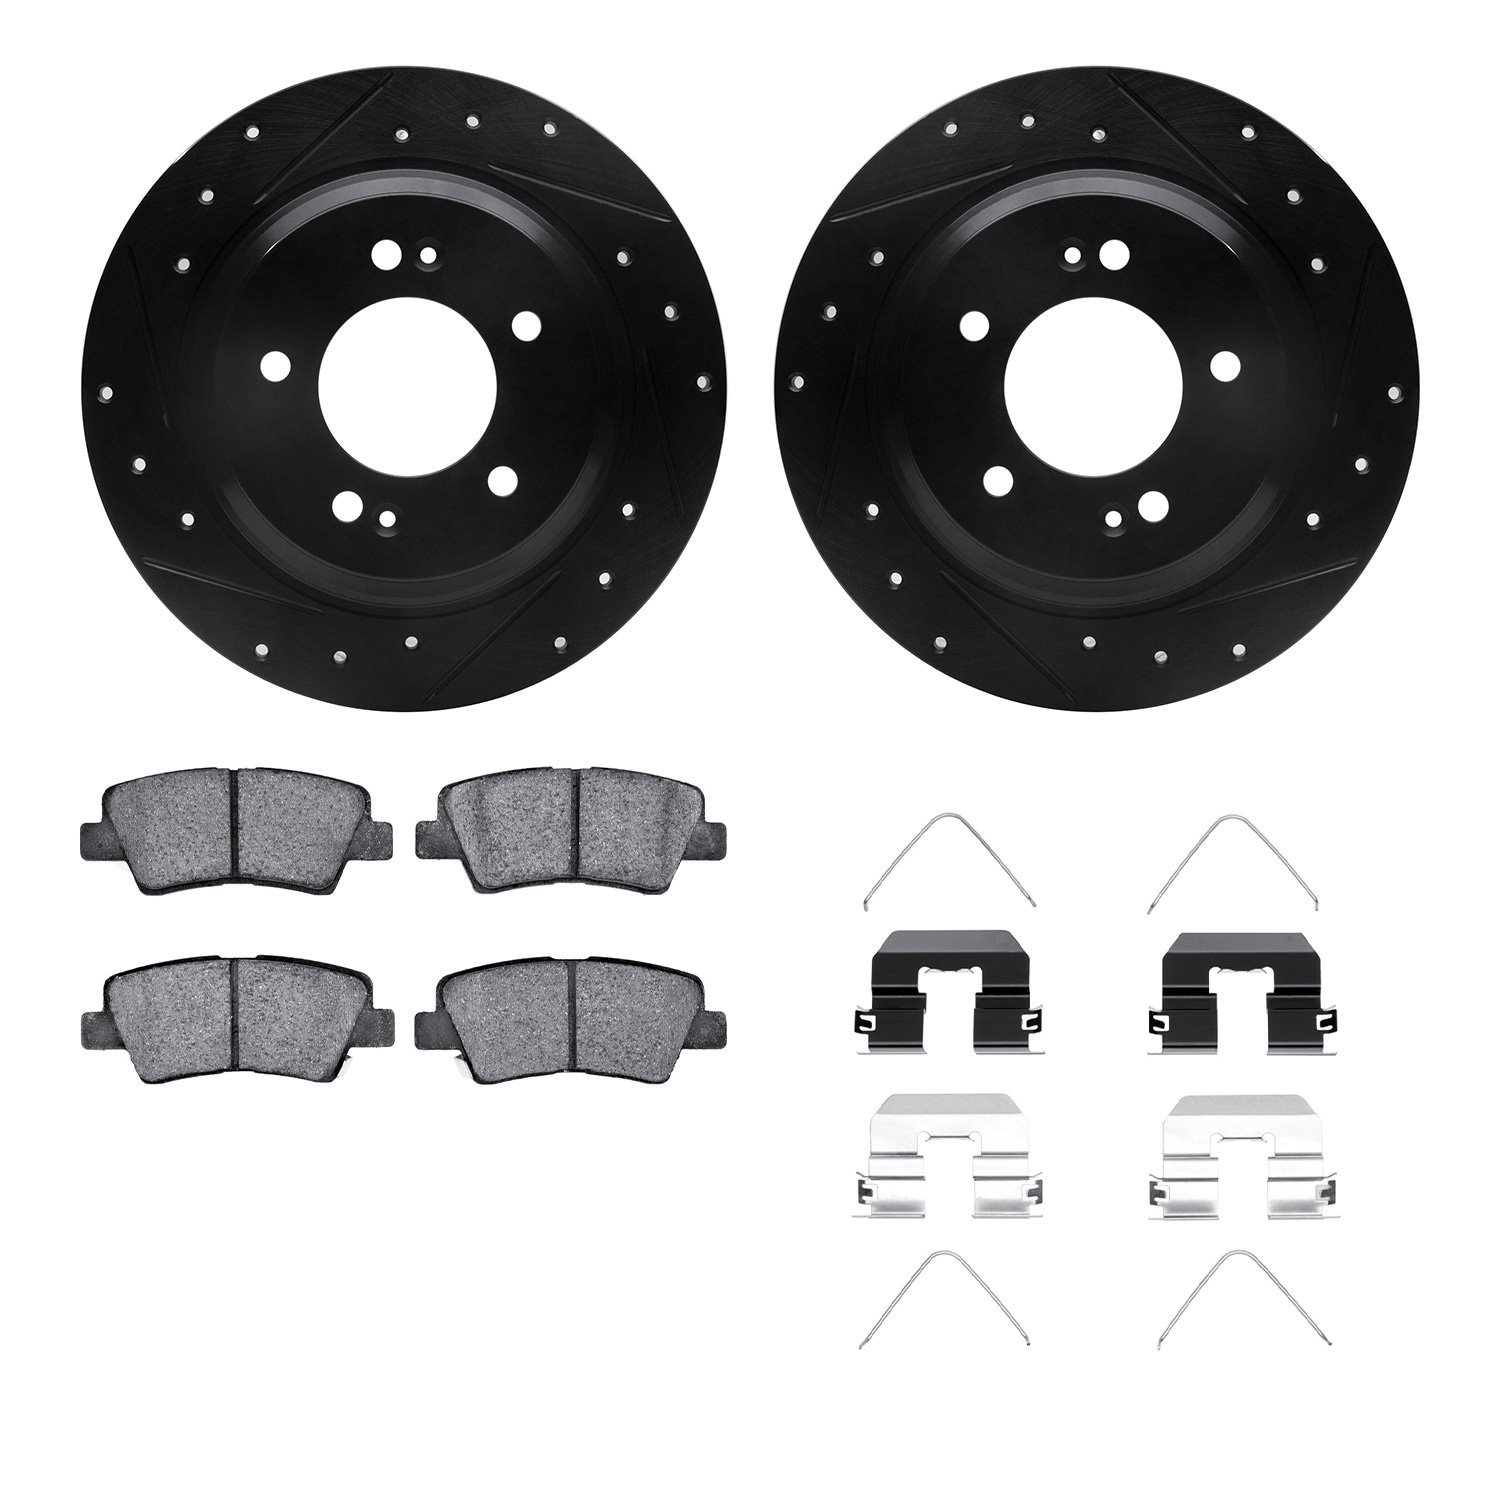 8312-21033 Drilled/Slotted Brake Rotors with 3000-Series Ceramic Brake Pads Kit & Hardware [Black], Fits Select Kia/Hyundai/Gene